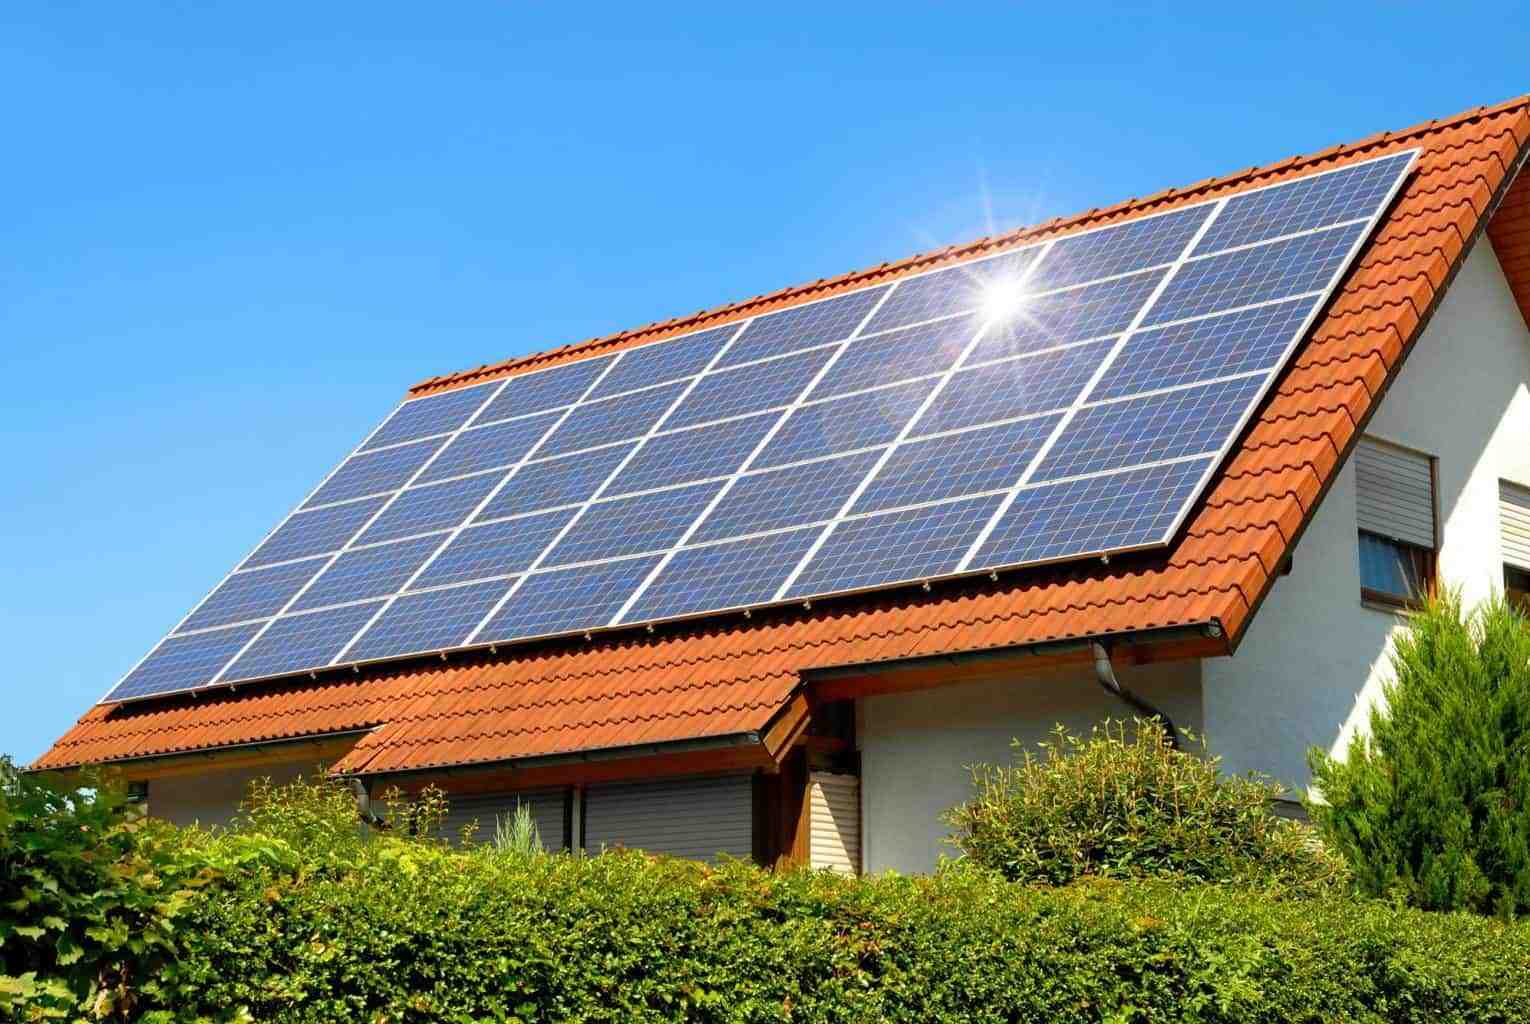 Do solar panels eliminate electric bill?